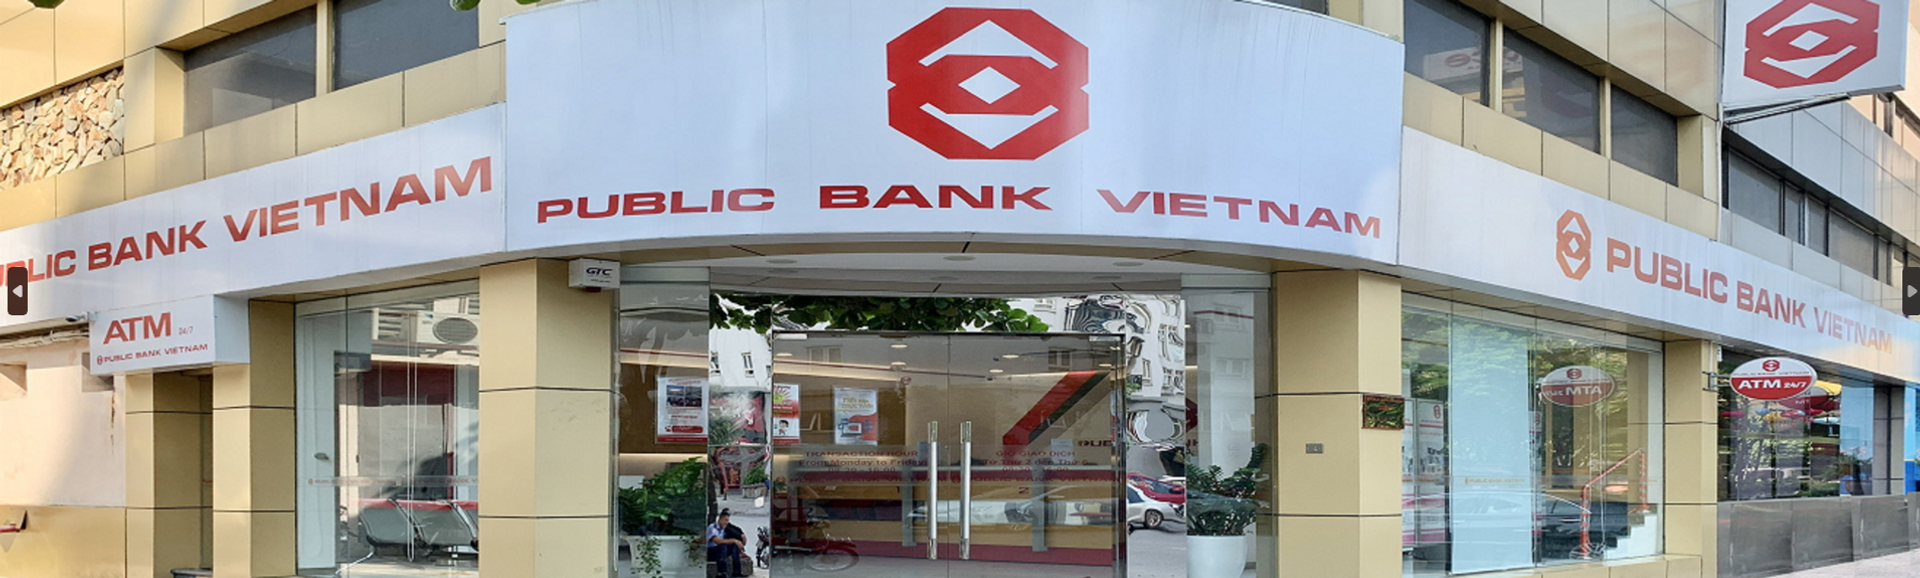 Public Bank Vietnam (PBVN)